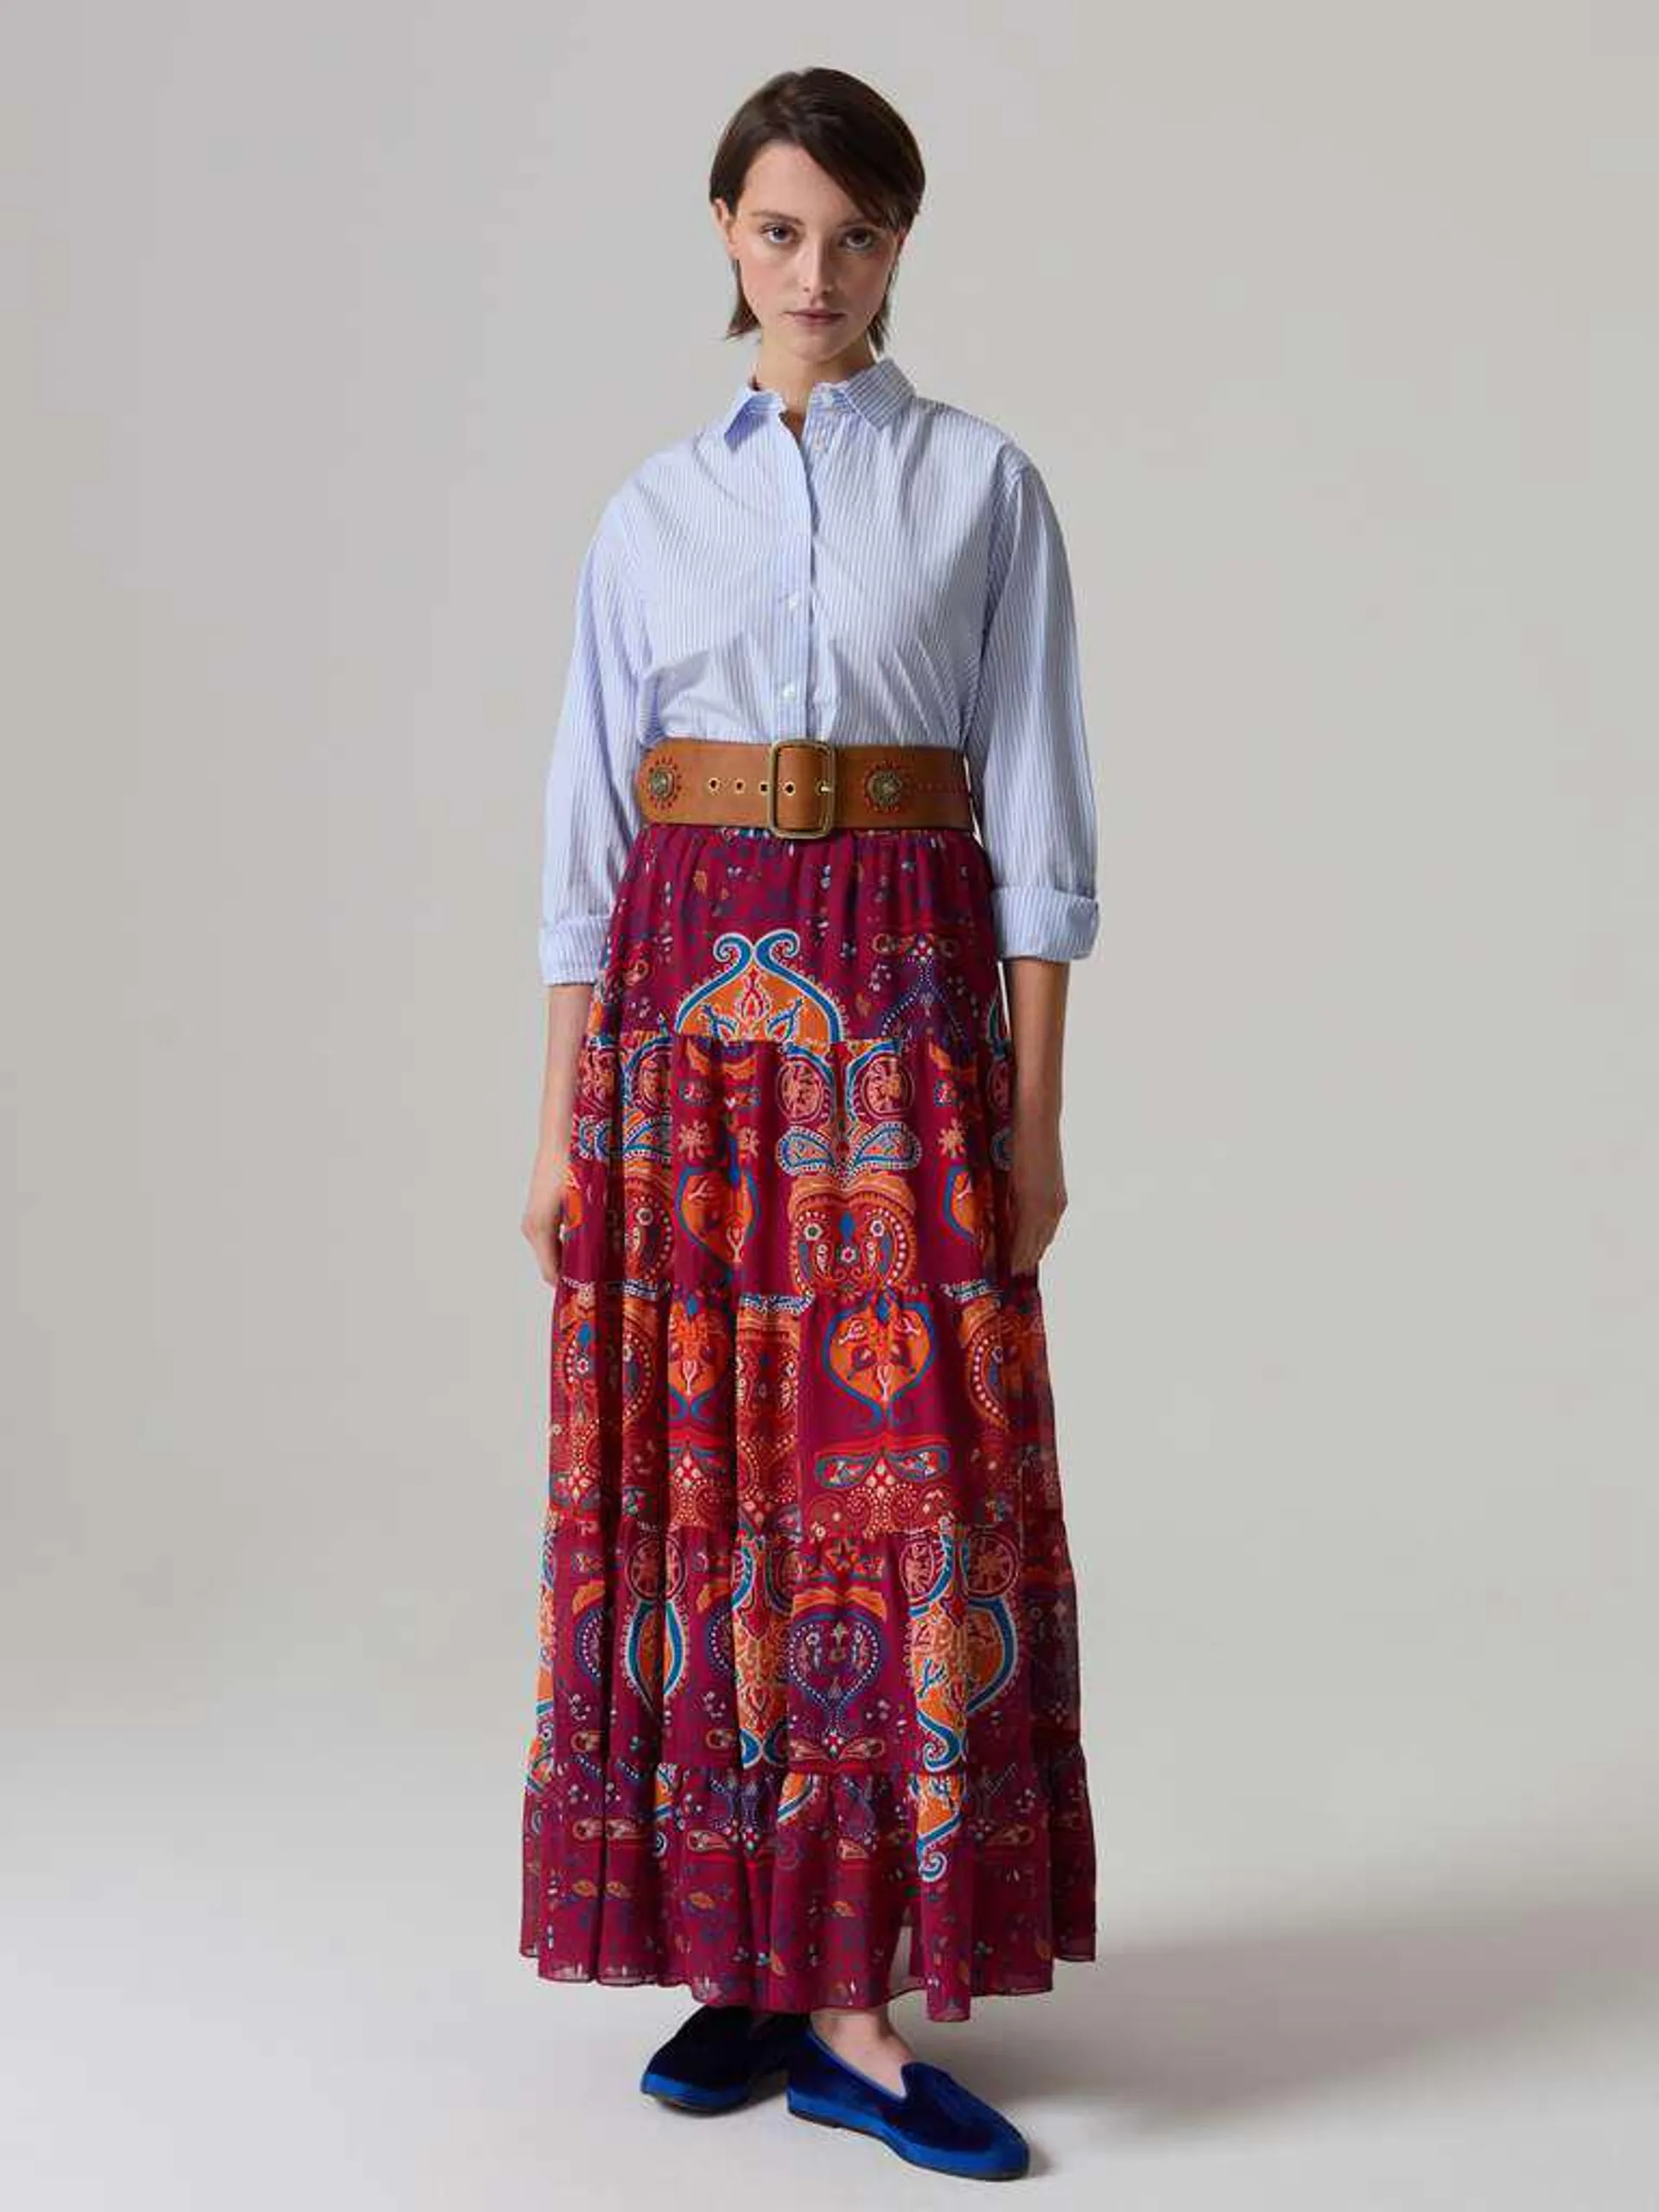 Orange/Pink Long tiered skirt with folk print